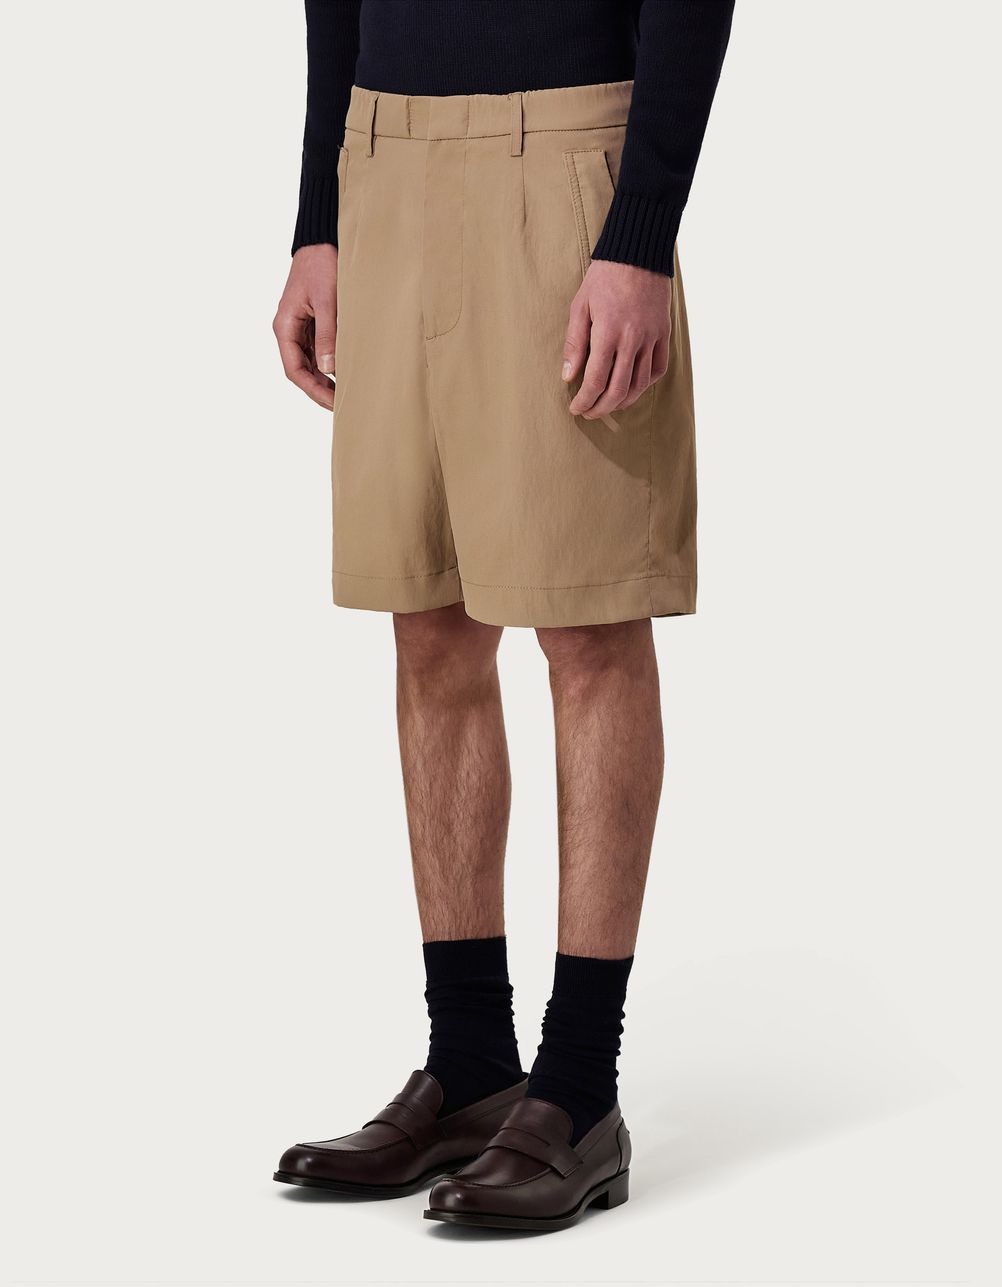 Bermuda shorts in camel technical fabric